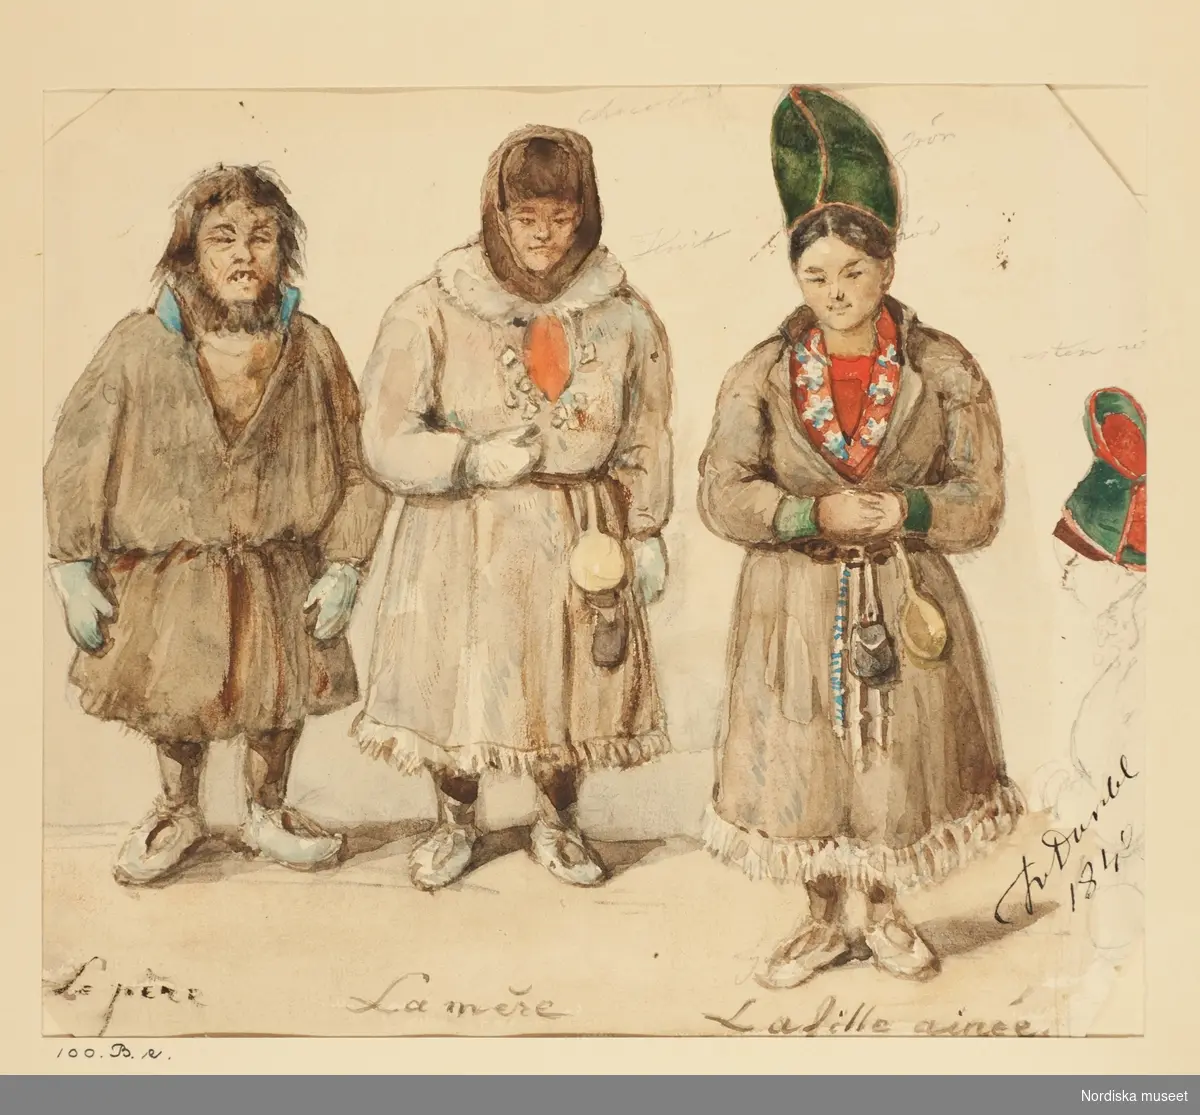 Akvarell av Fritz von Dardel, 1840. "Le père, la mère, la fille ainée". En samisk familj: pappan, mamman och äldsta dottern. L.A. 5